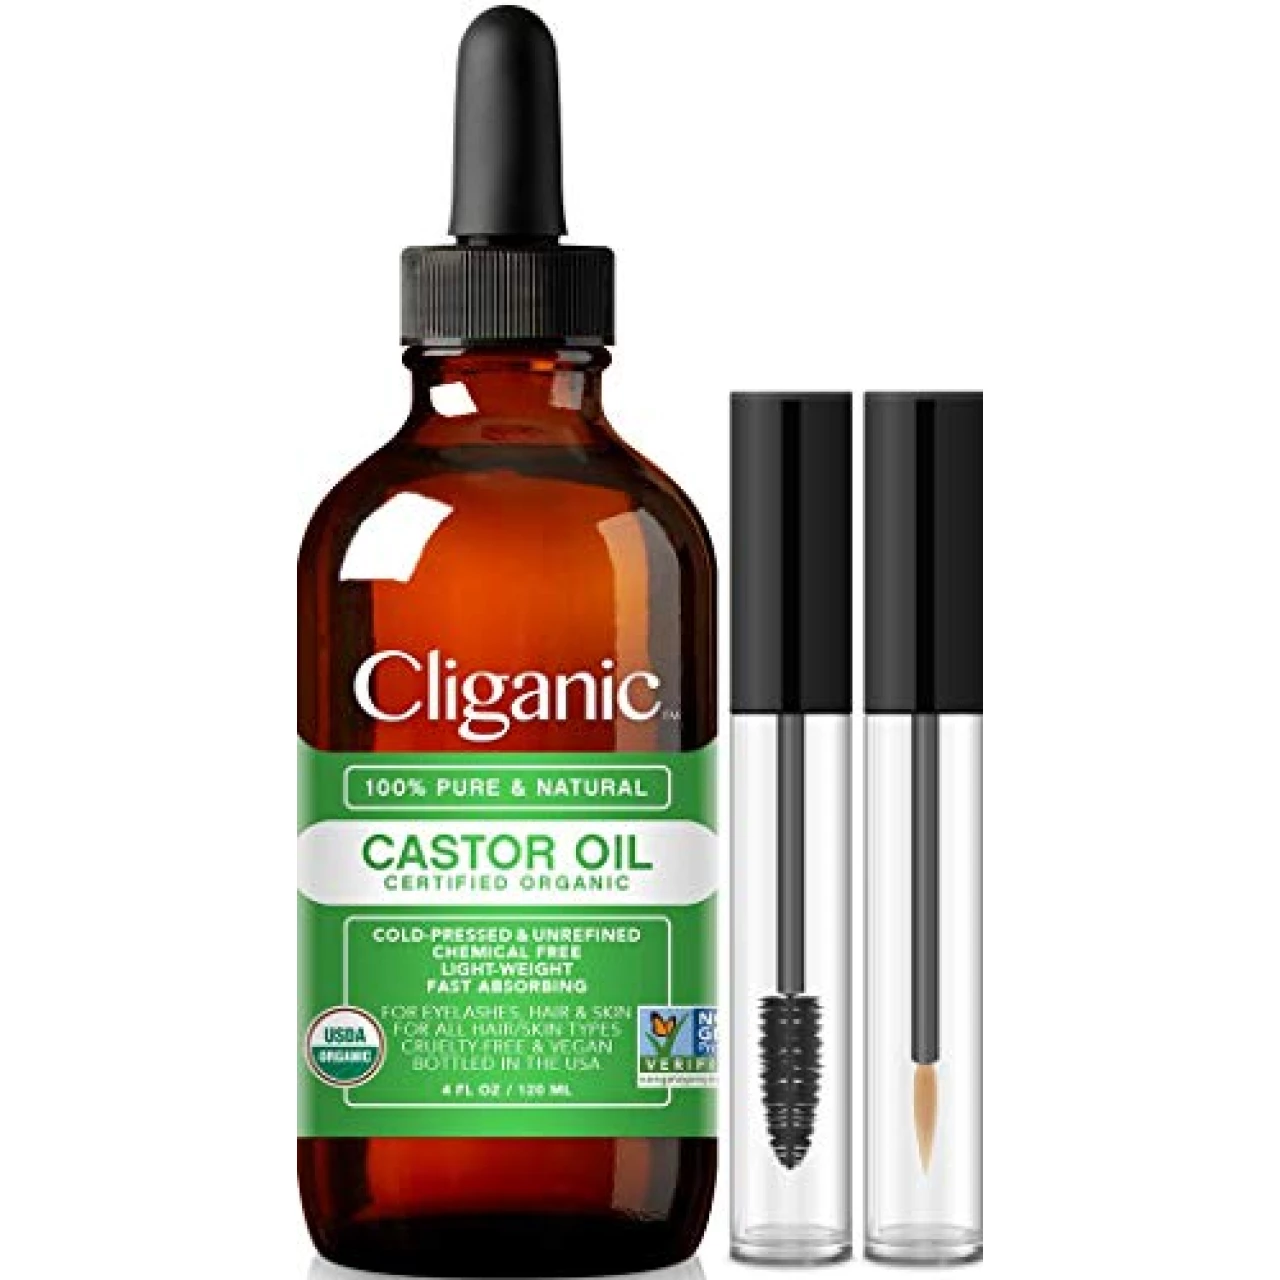 Cliganic Organic Castor Oil (4oz with Eyelash Kit)